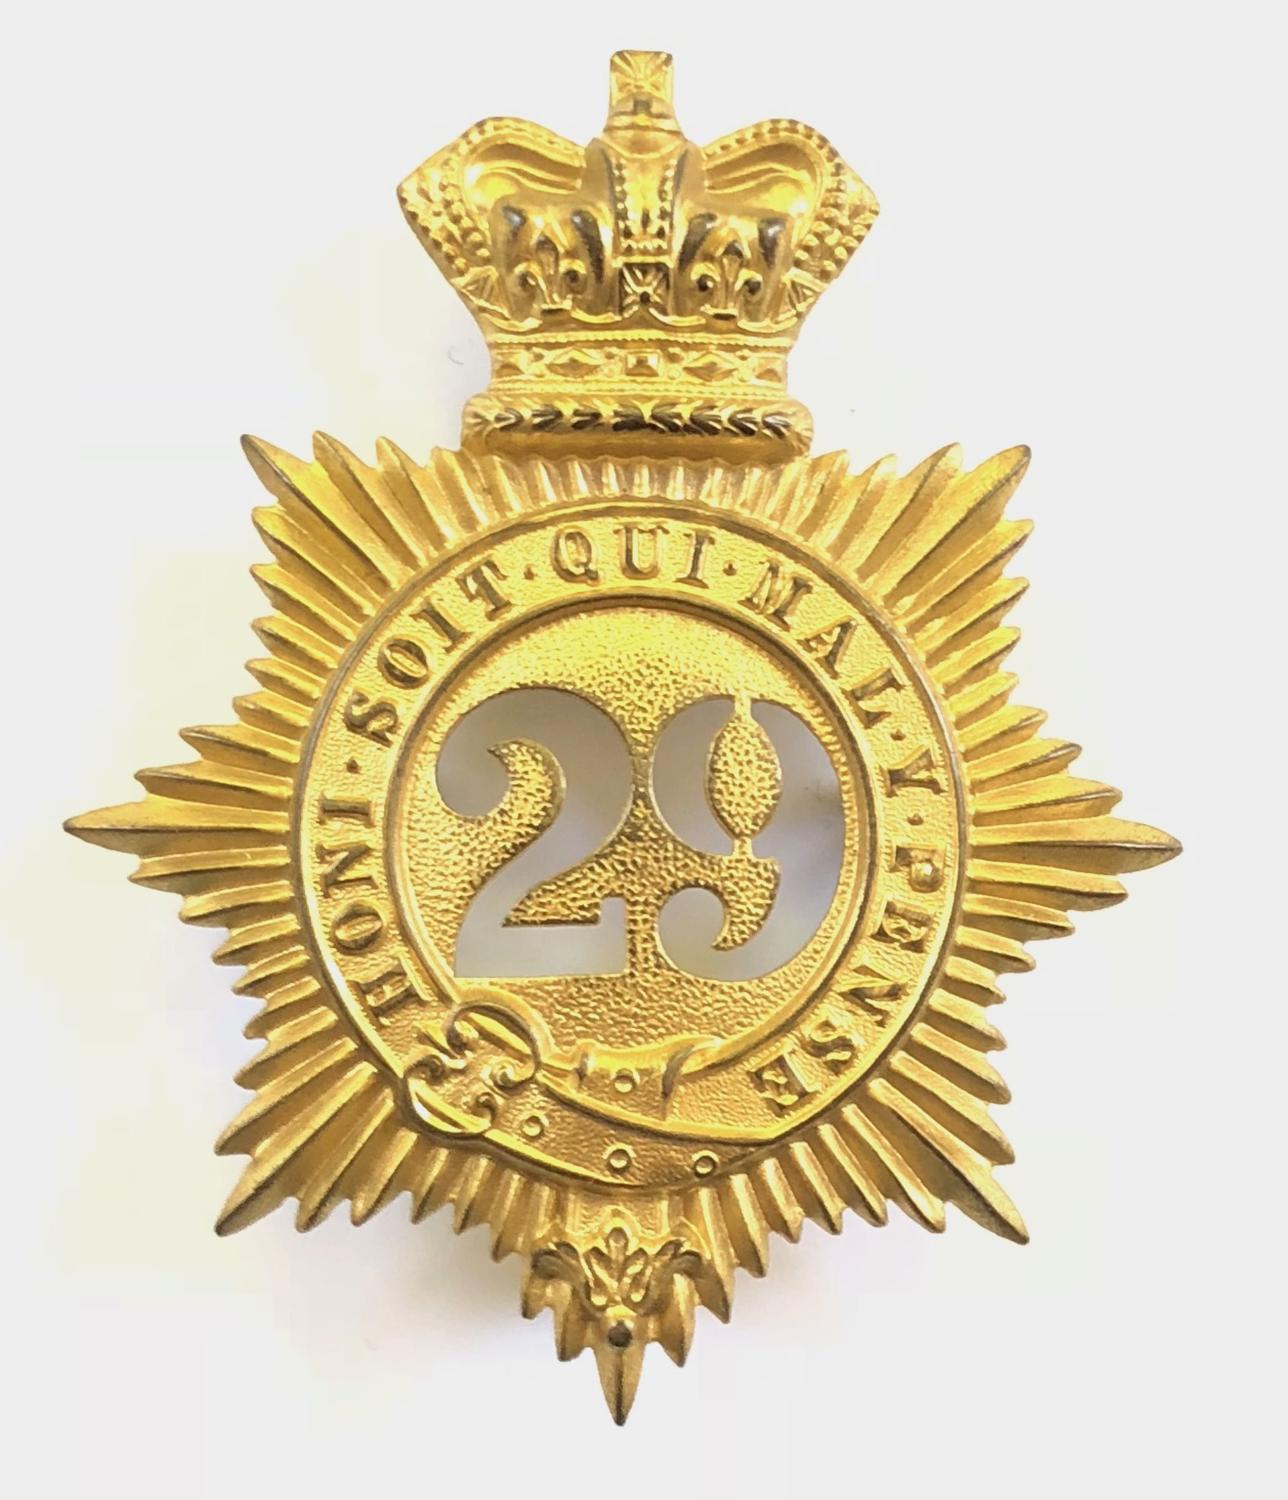 29th (Worcestershire) Foot Victorian senior NCO’s shako plate c1861-